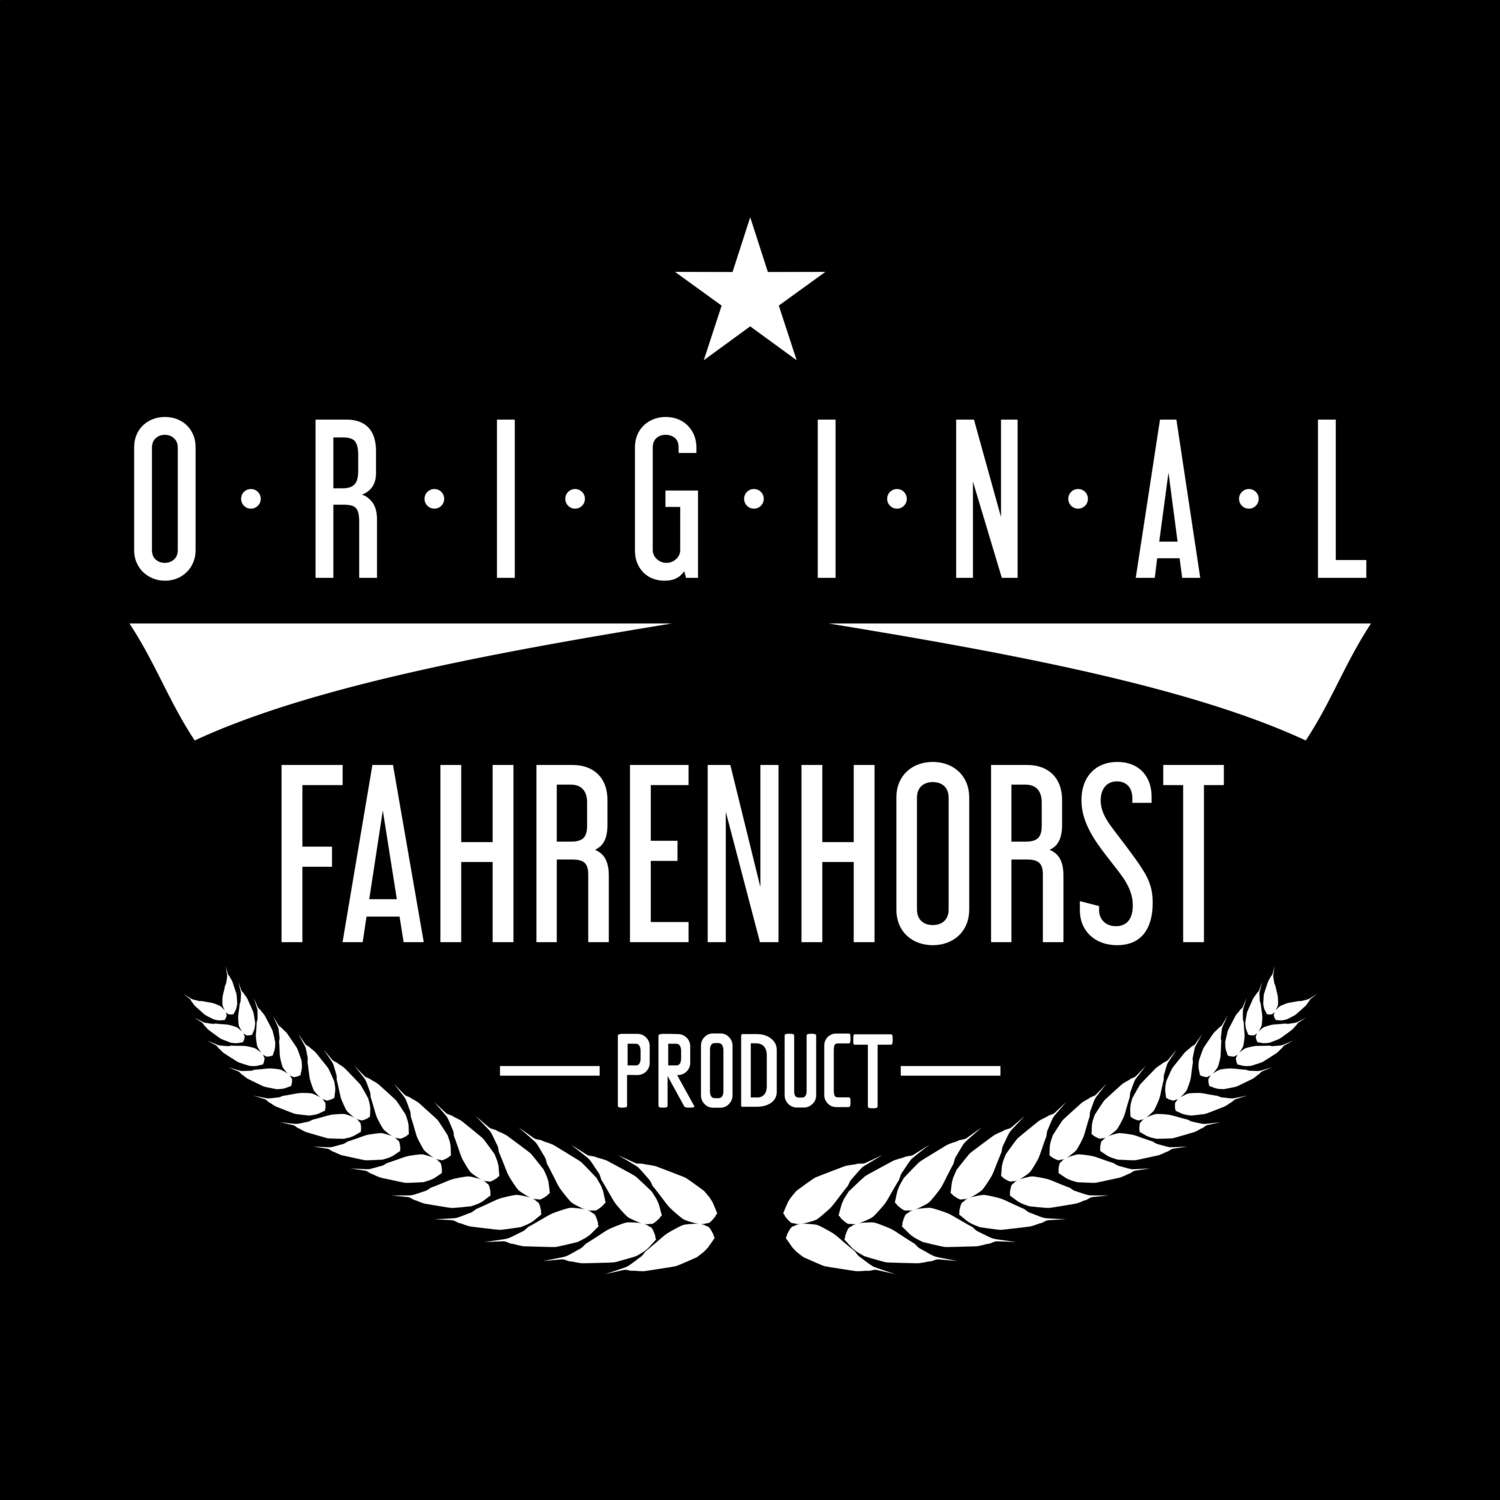 Fahrenhorst T-Shirt »Original Product«